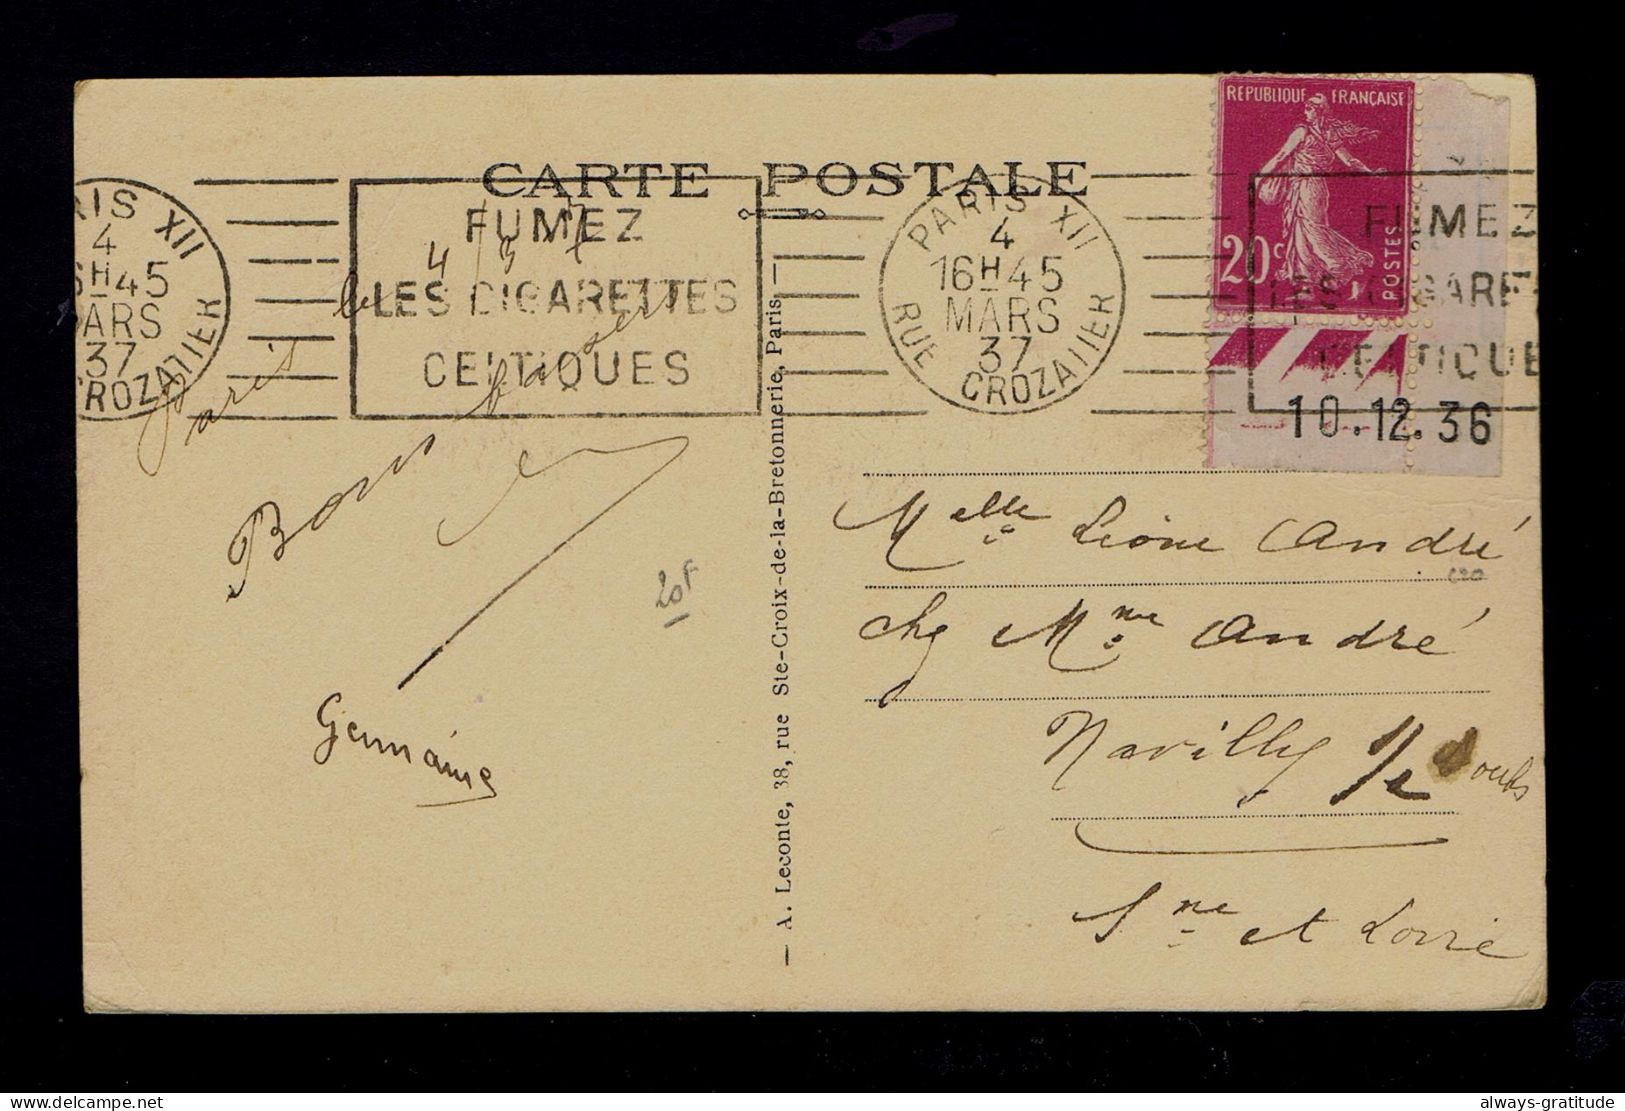 Sp10163 FRANCE Tabac Smoke Tobacco "fumes Les Cigarettes Celtiques" Mailed 1937 Slogan Pmk Postcard Paris »Navilly - Tobacco